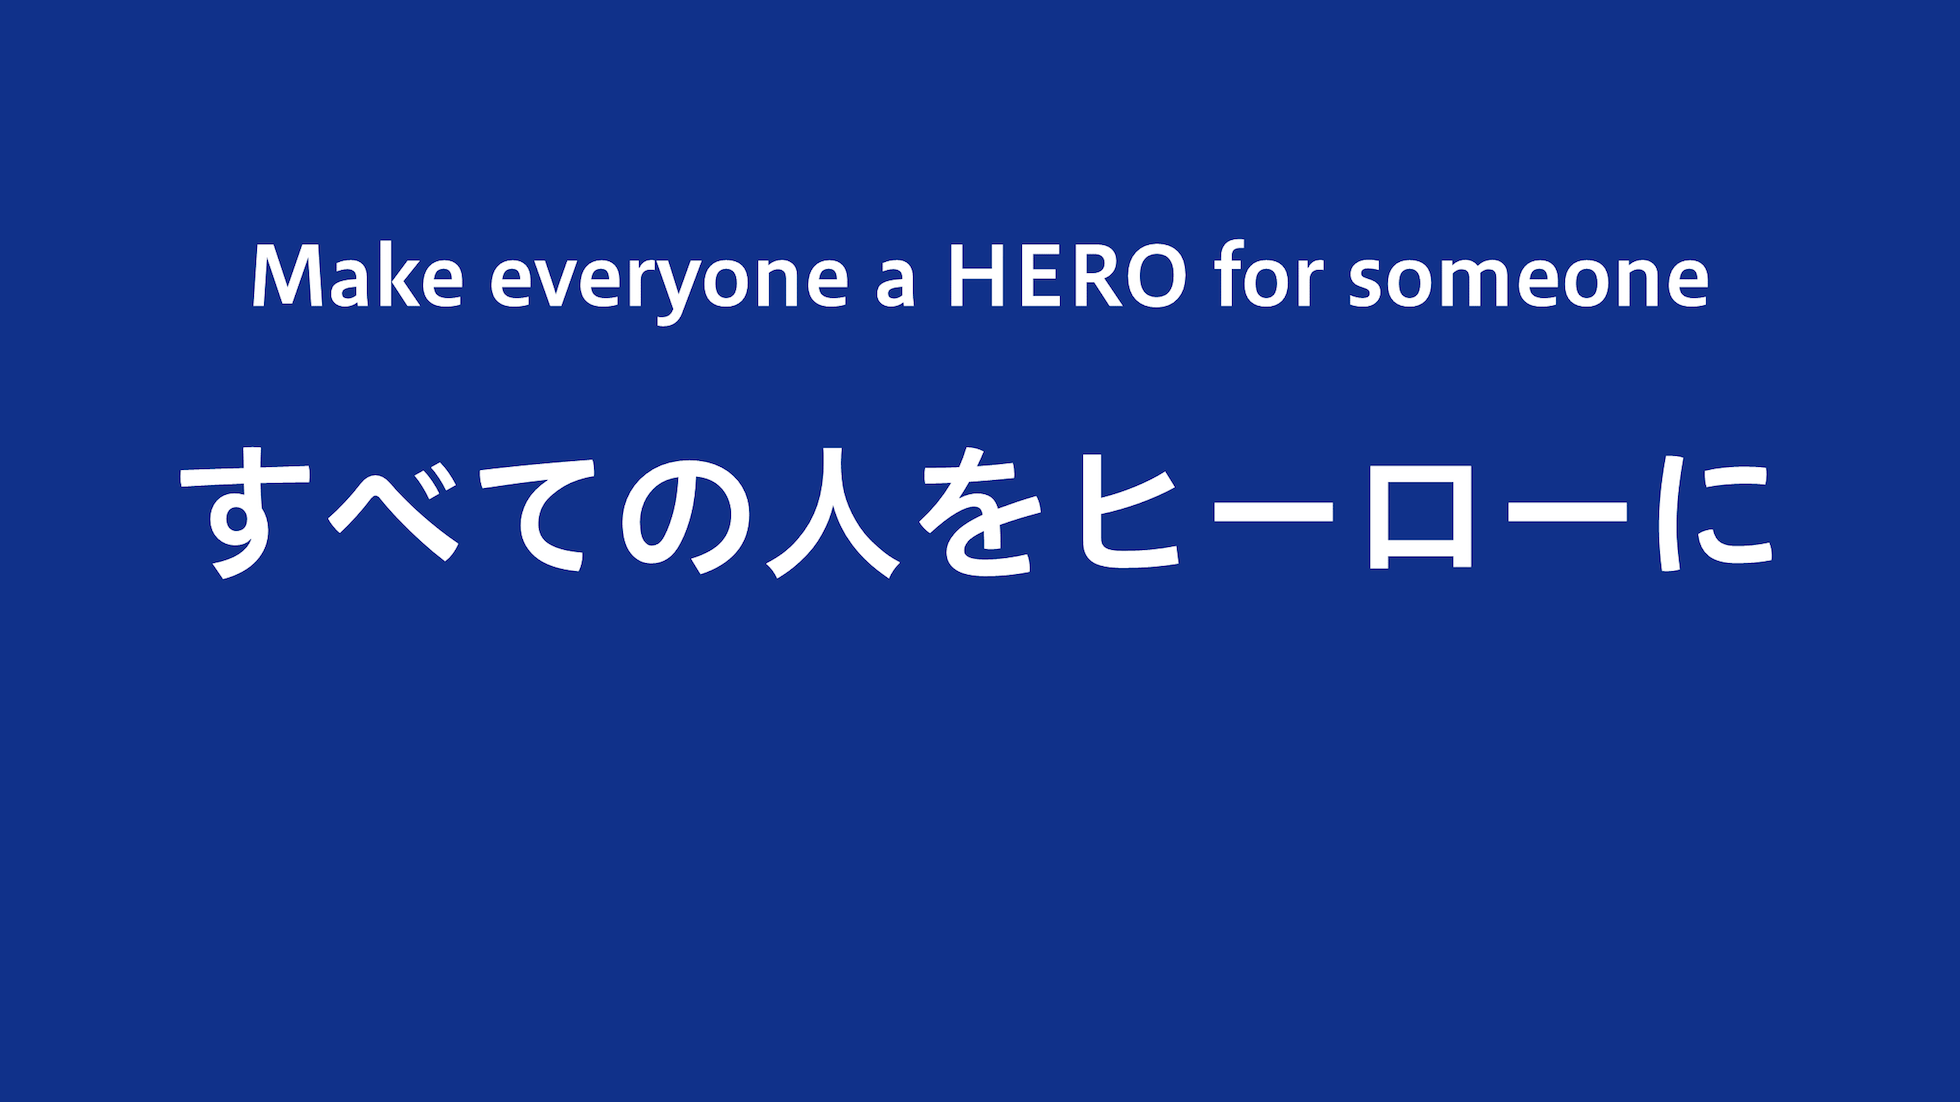 Make everyone a HERO for someone、すべての人をヒーローに